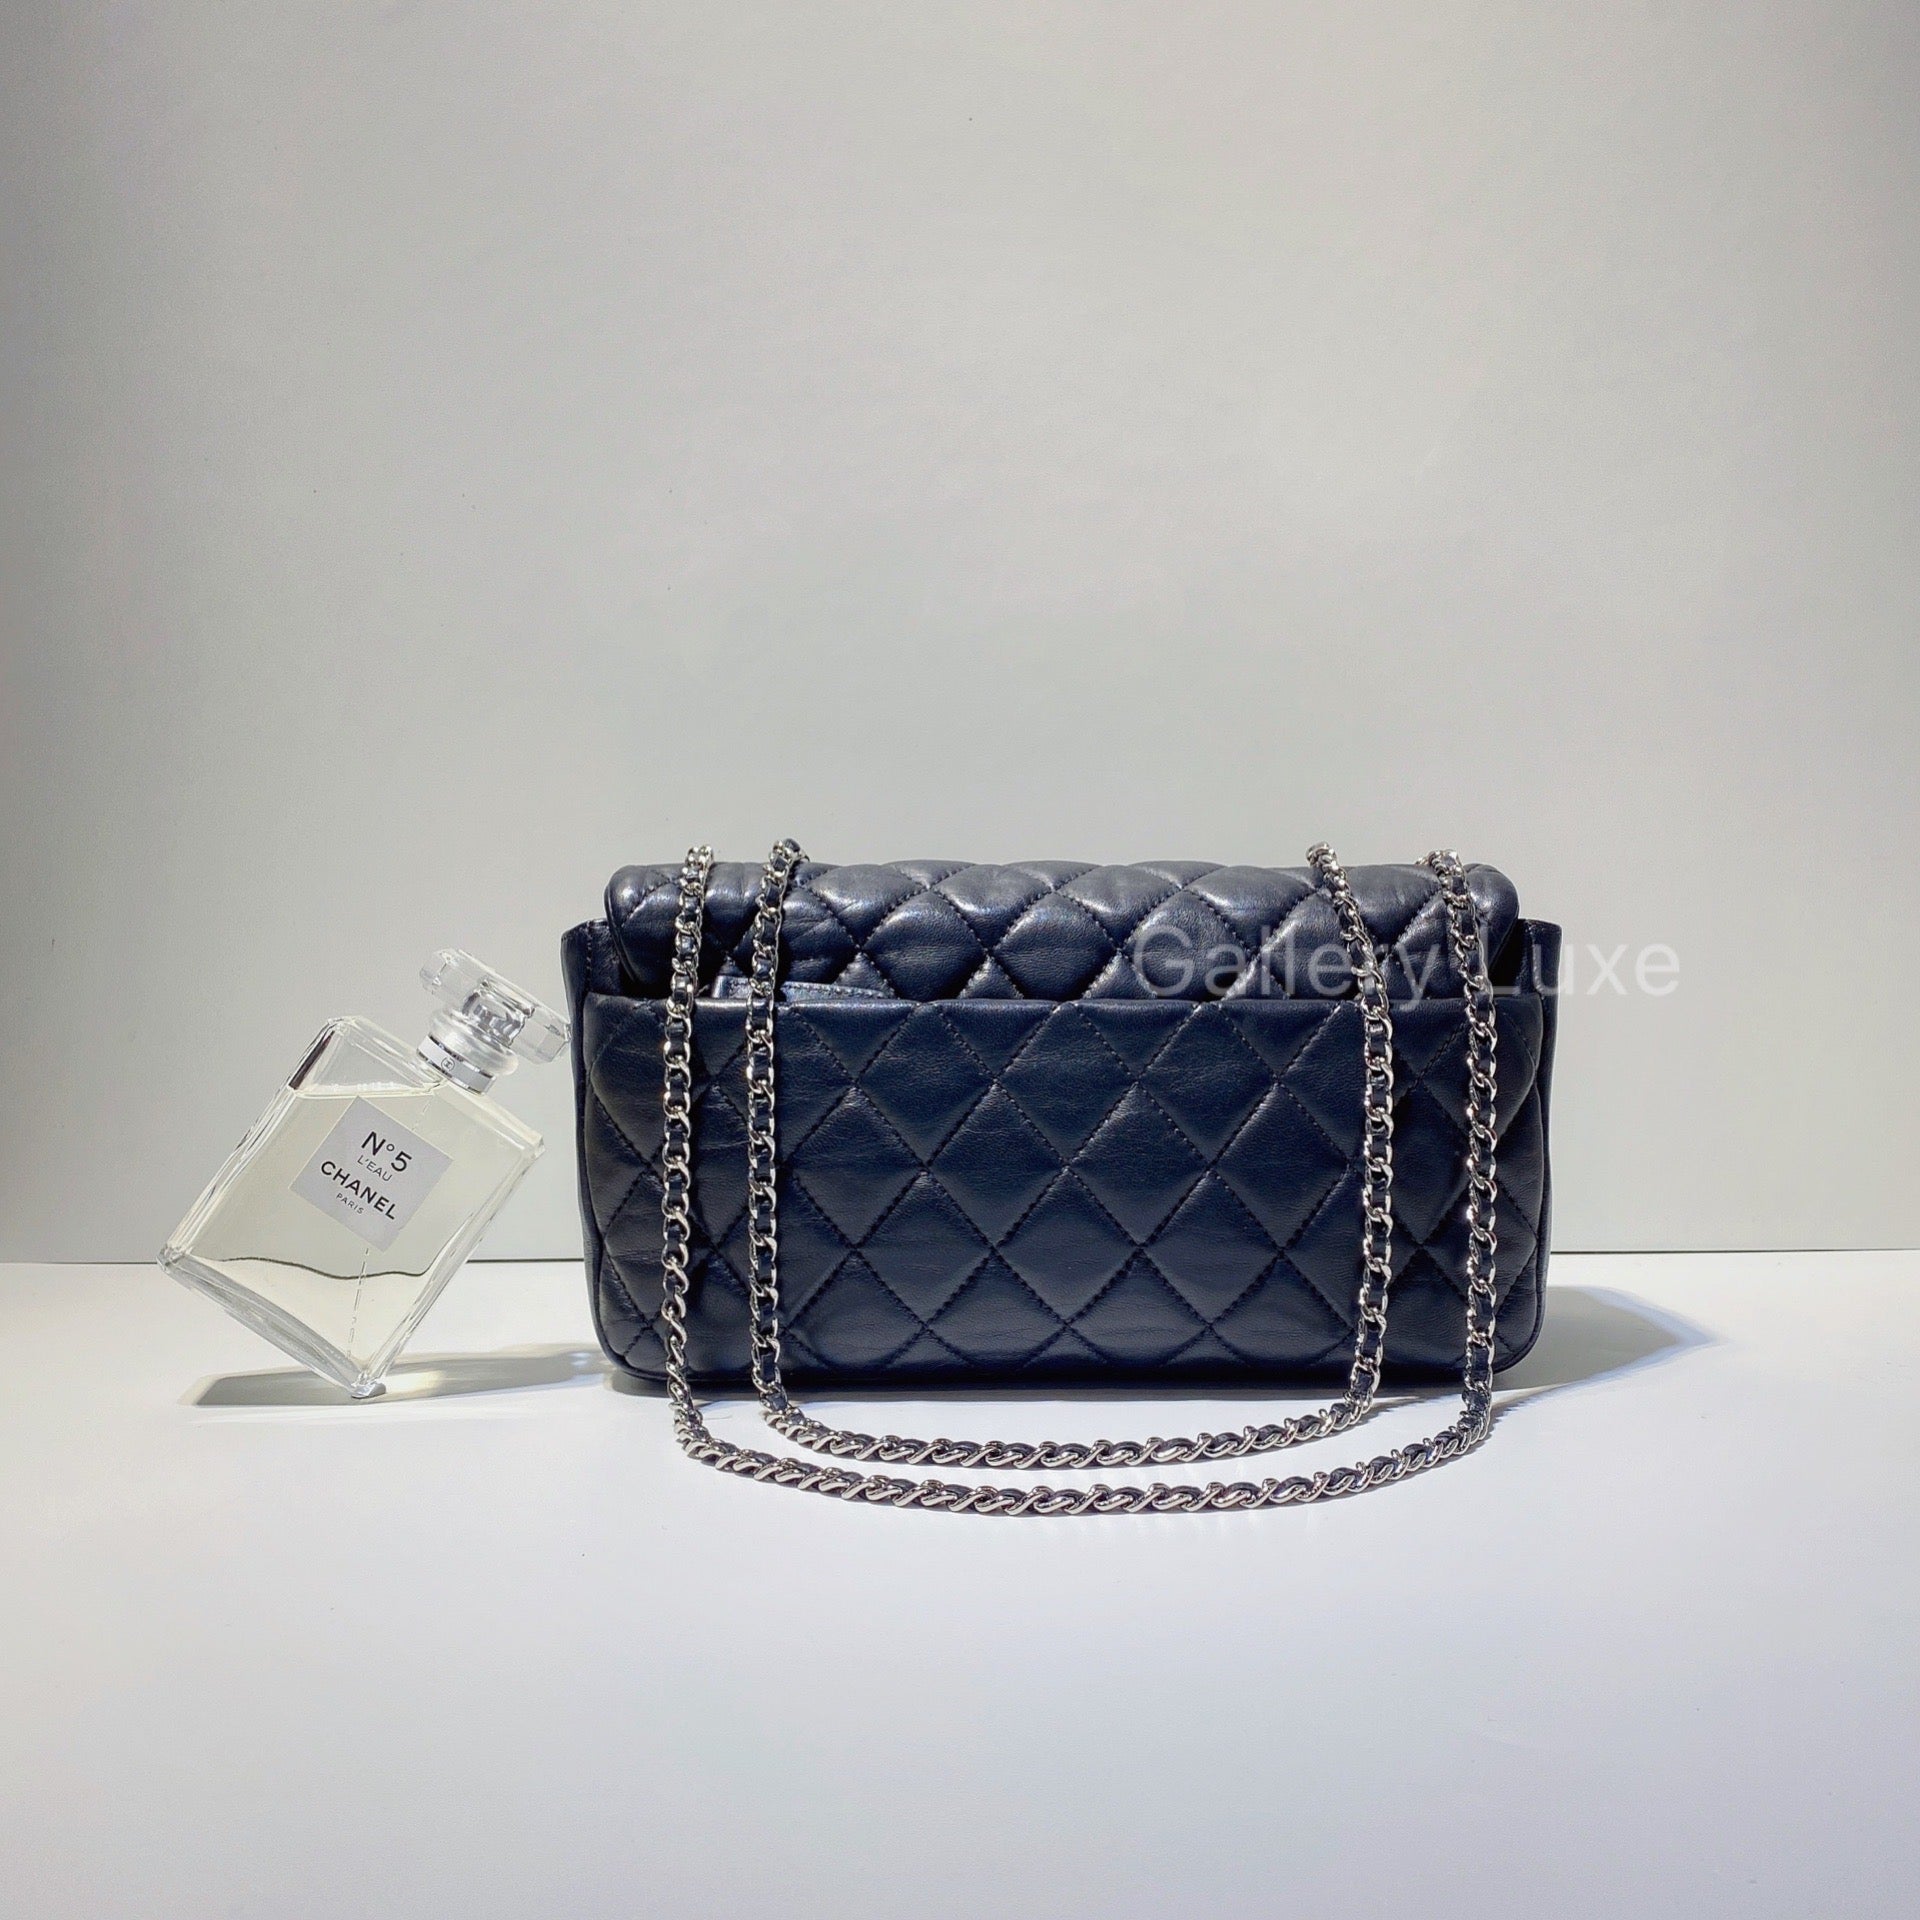 No.2754-Chanel Lambskin Coco Rain Flap Bag – Gallery Luxe